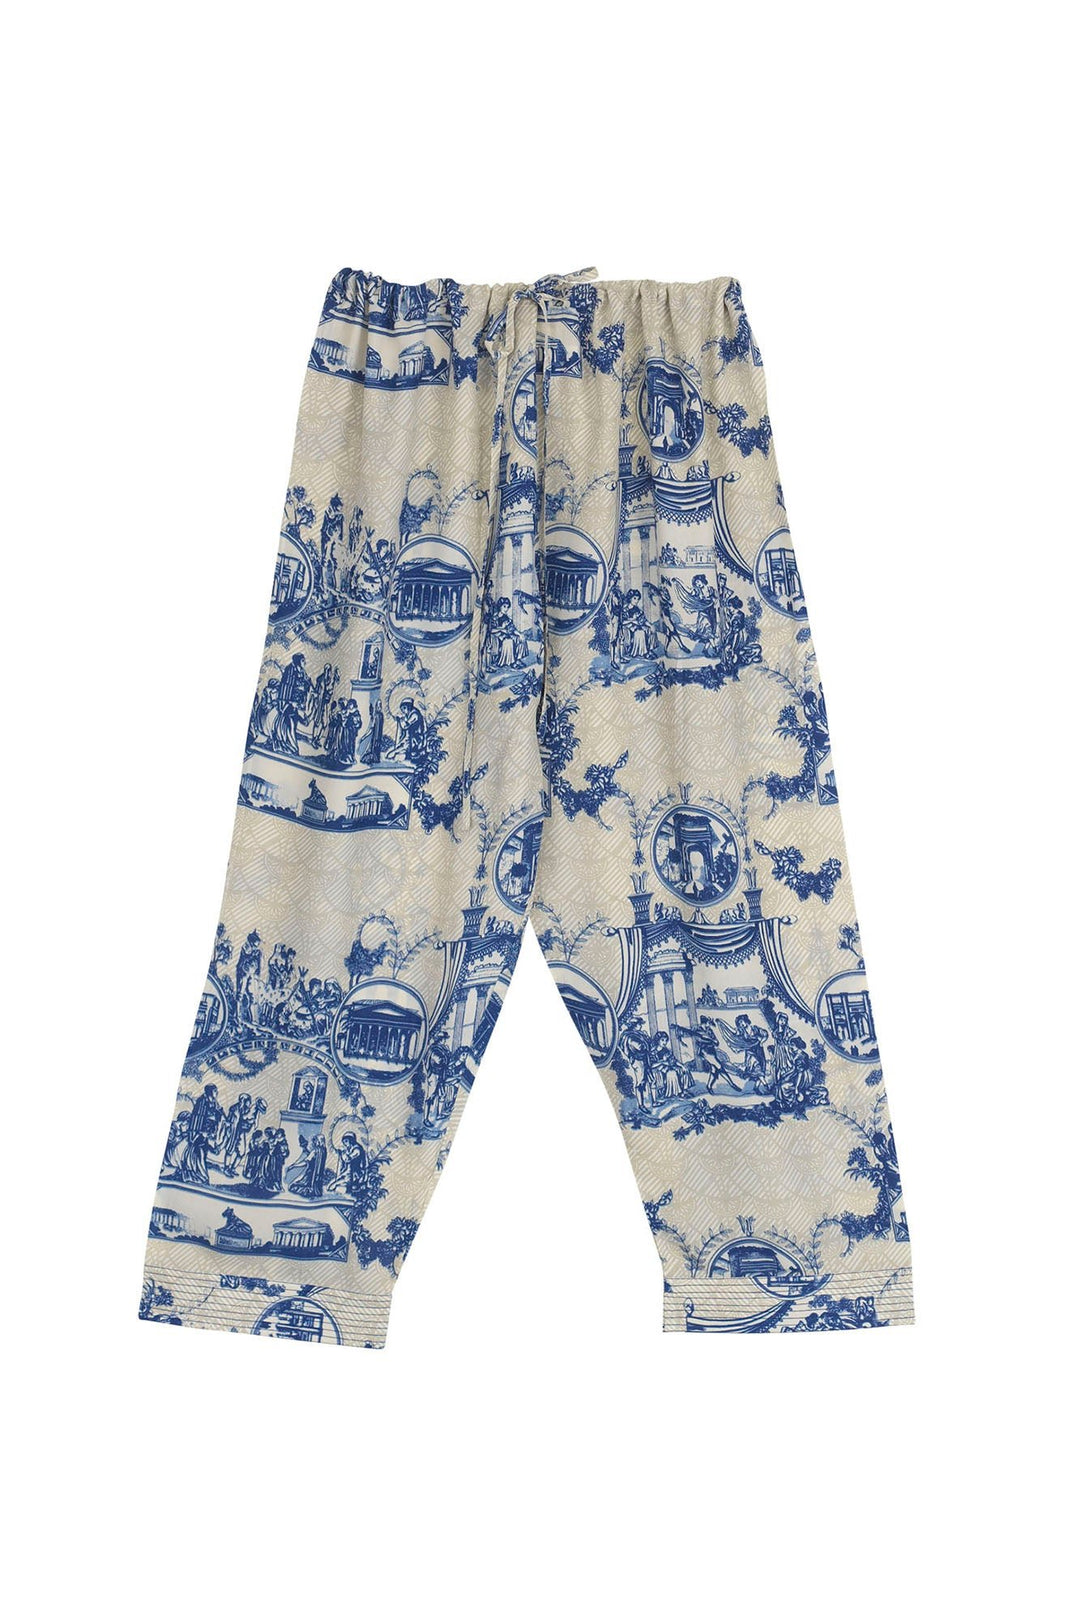 Ancient Columns Blue Crepe Lounge Pants - One Hundred Stars